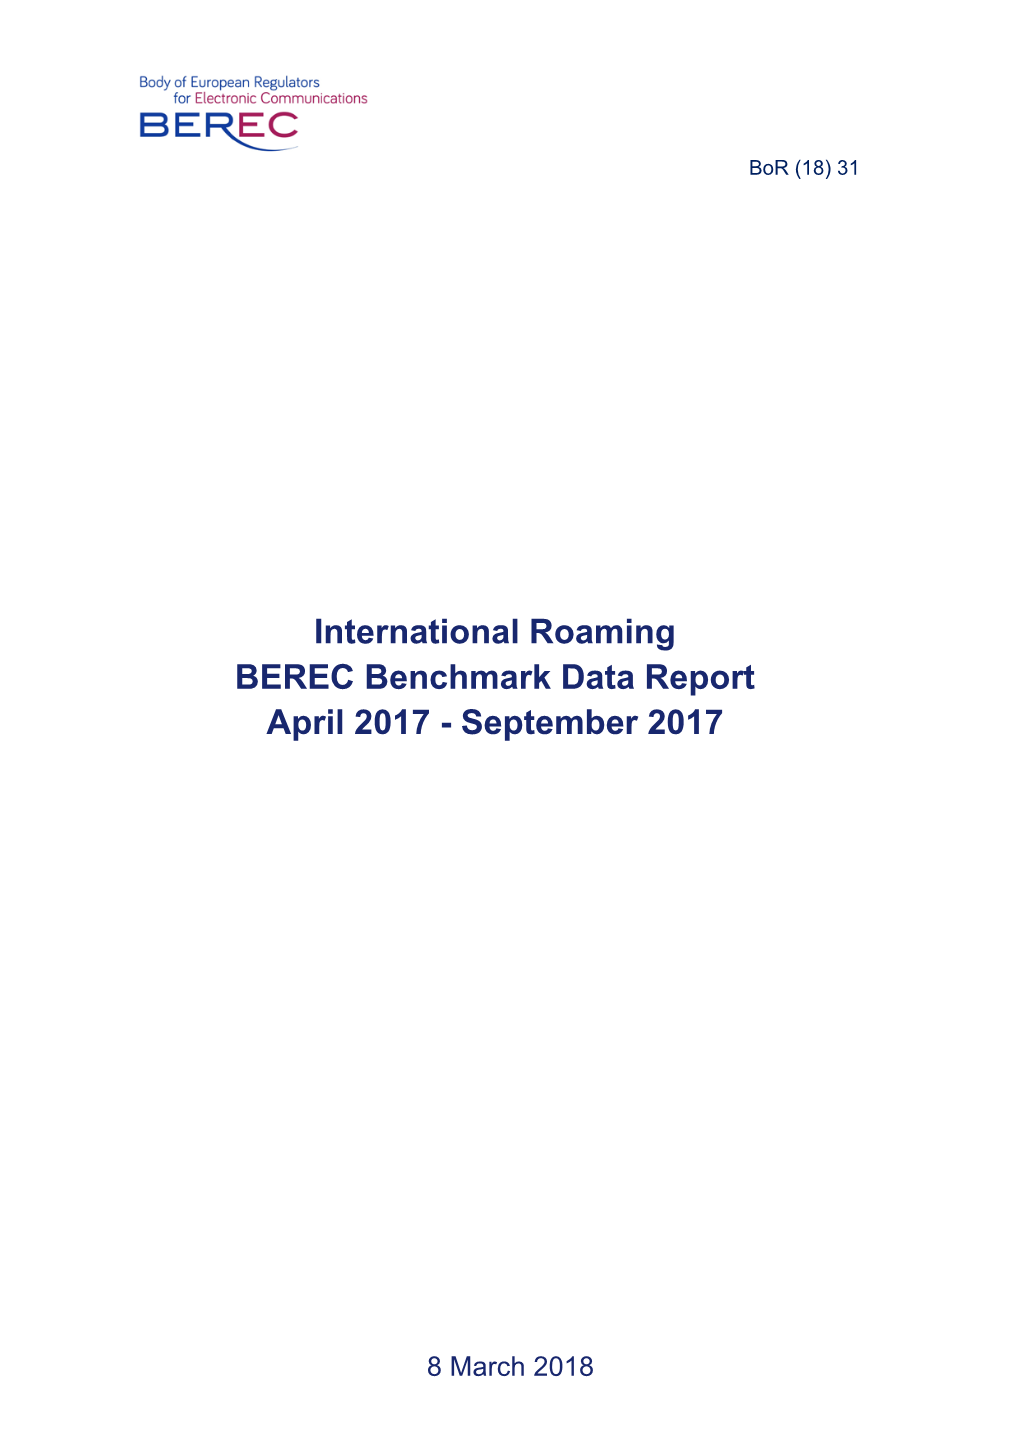 International Roaming BEREC Benchmark Data Report April 2017 - September 2017